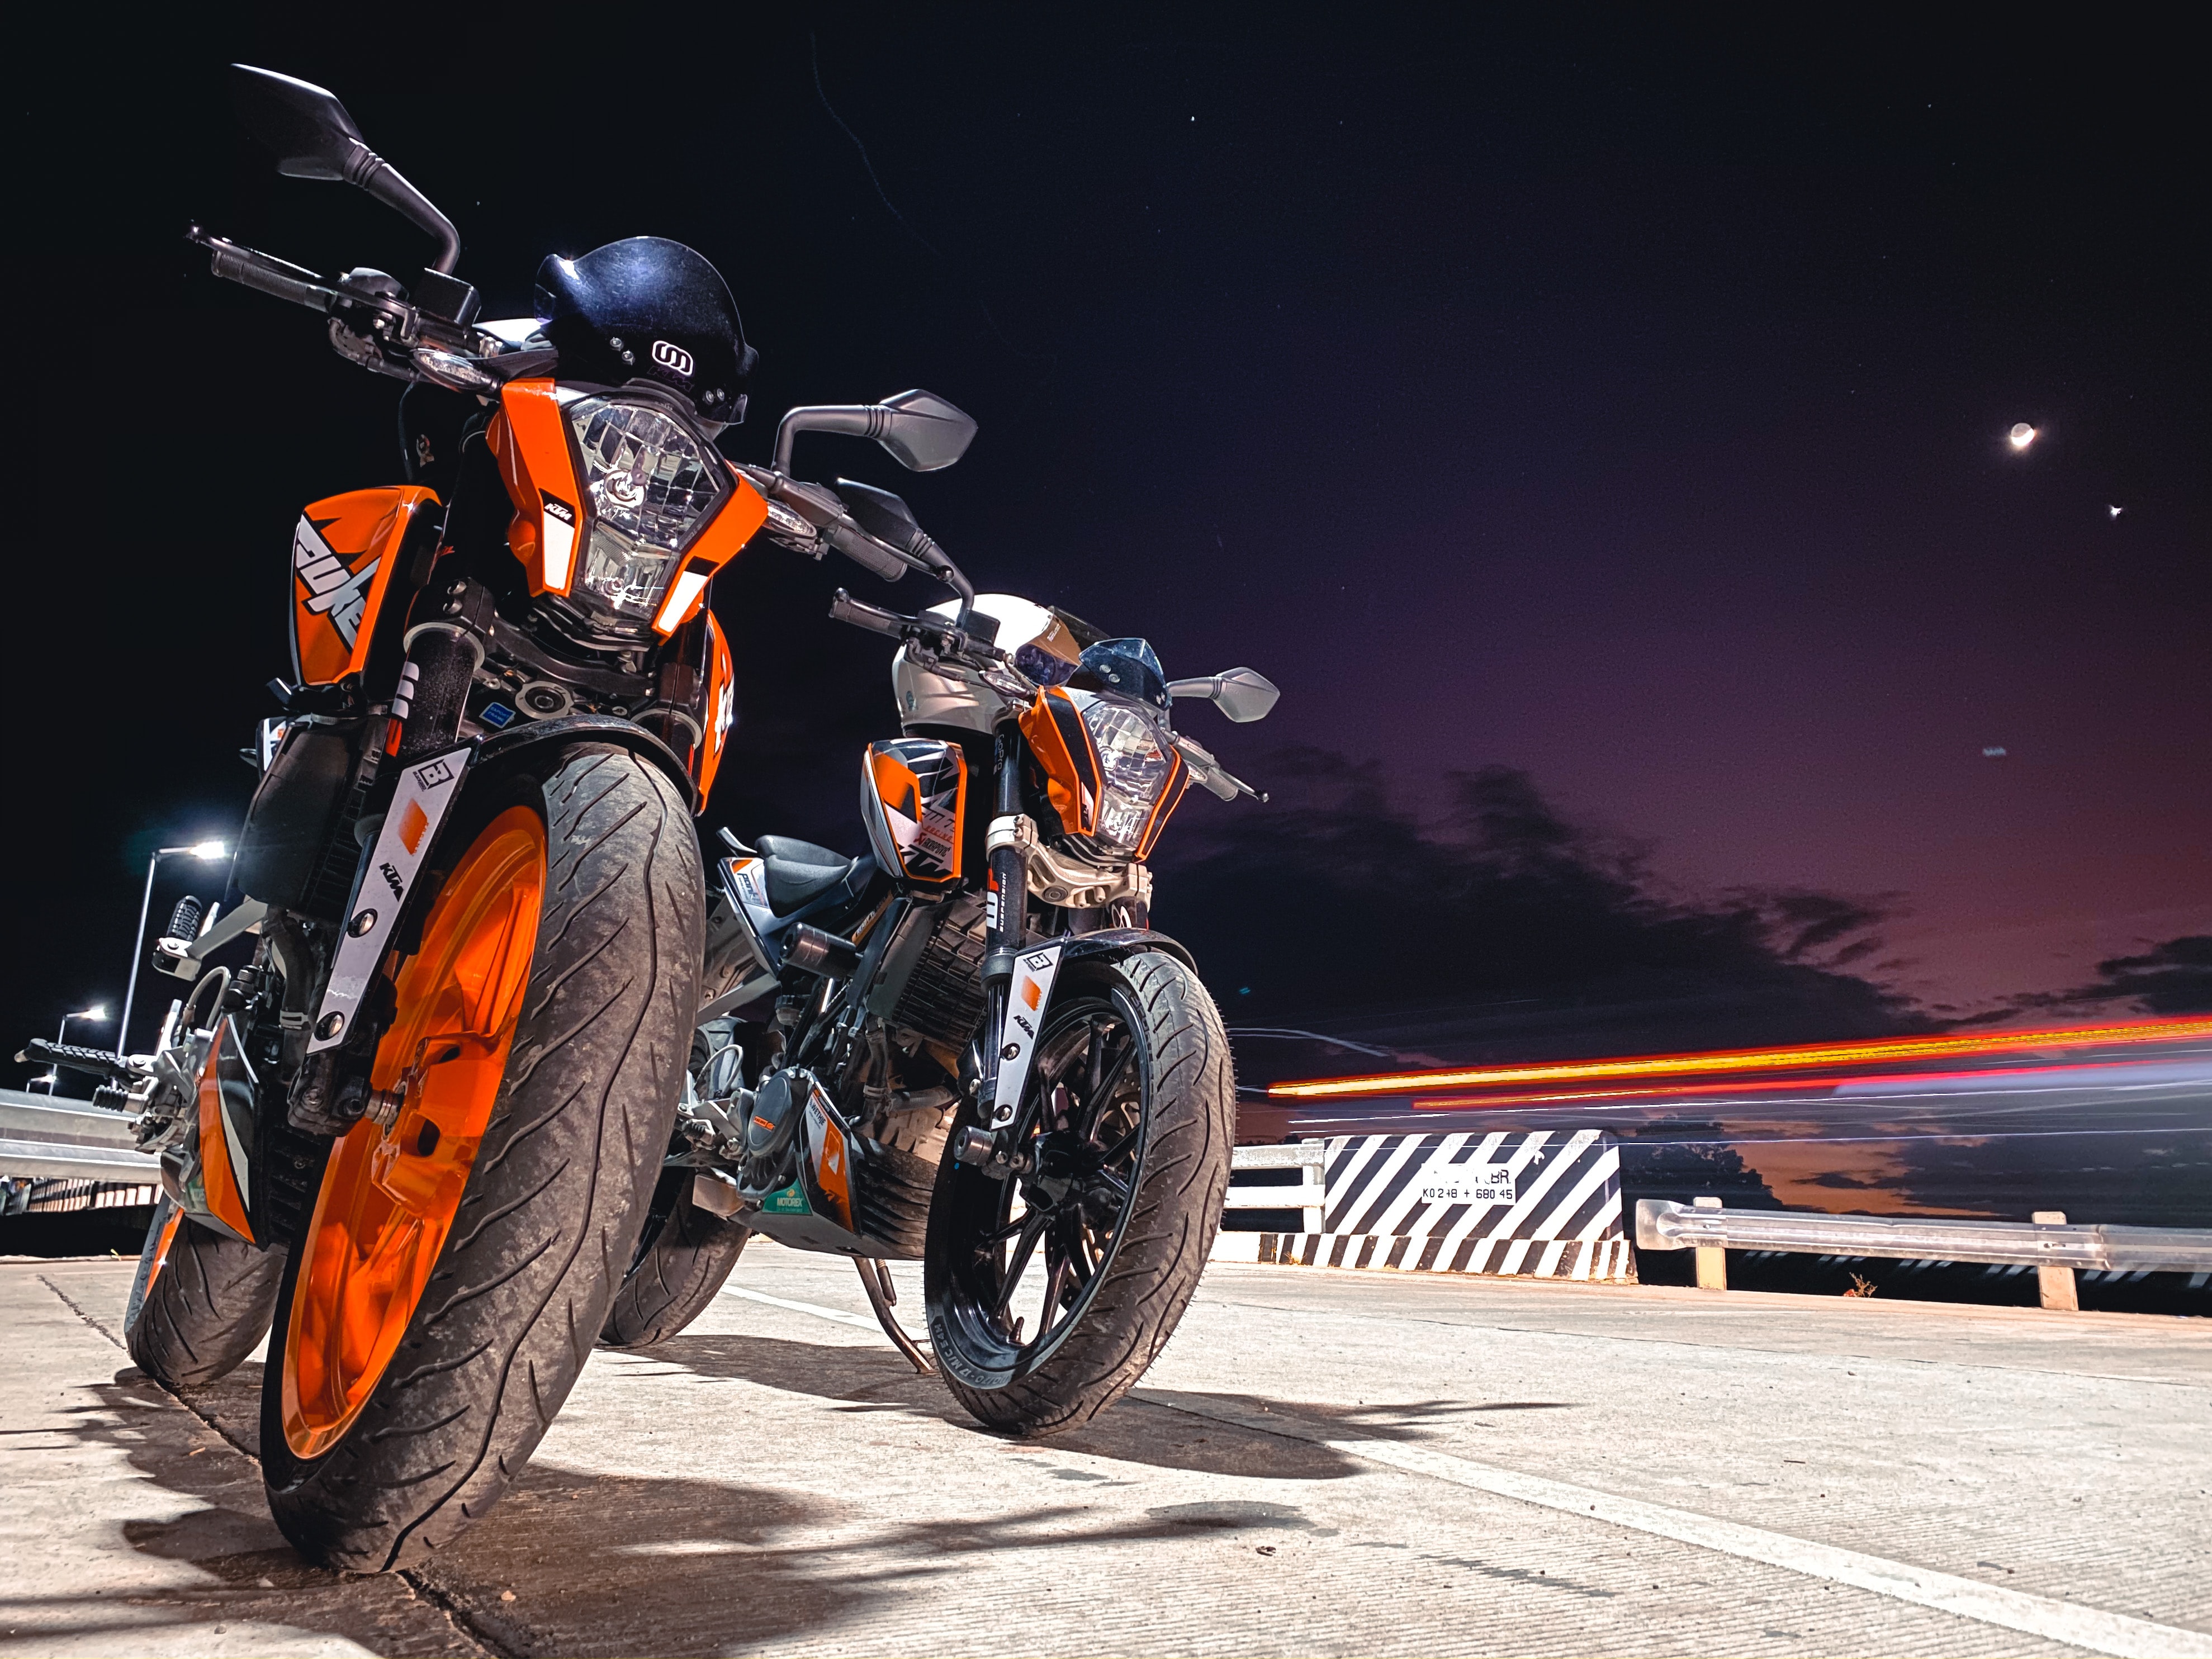 ktm, bikes, night, motorcycles, orange, road, stories